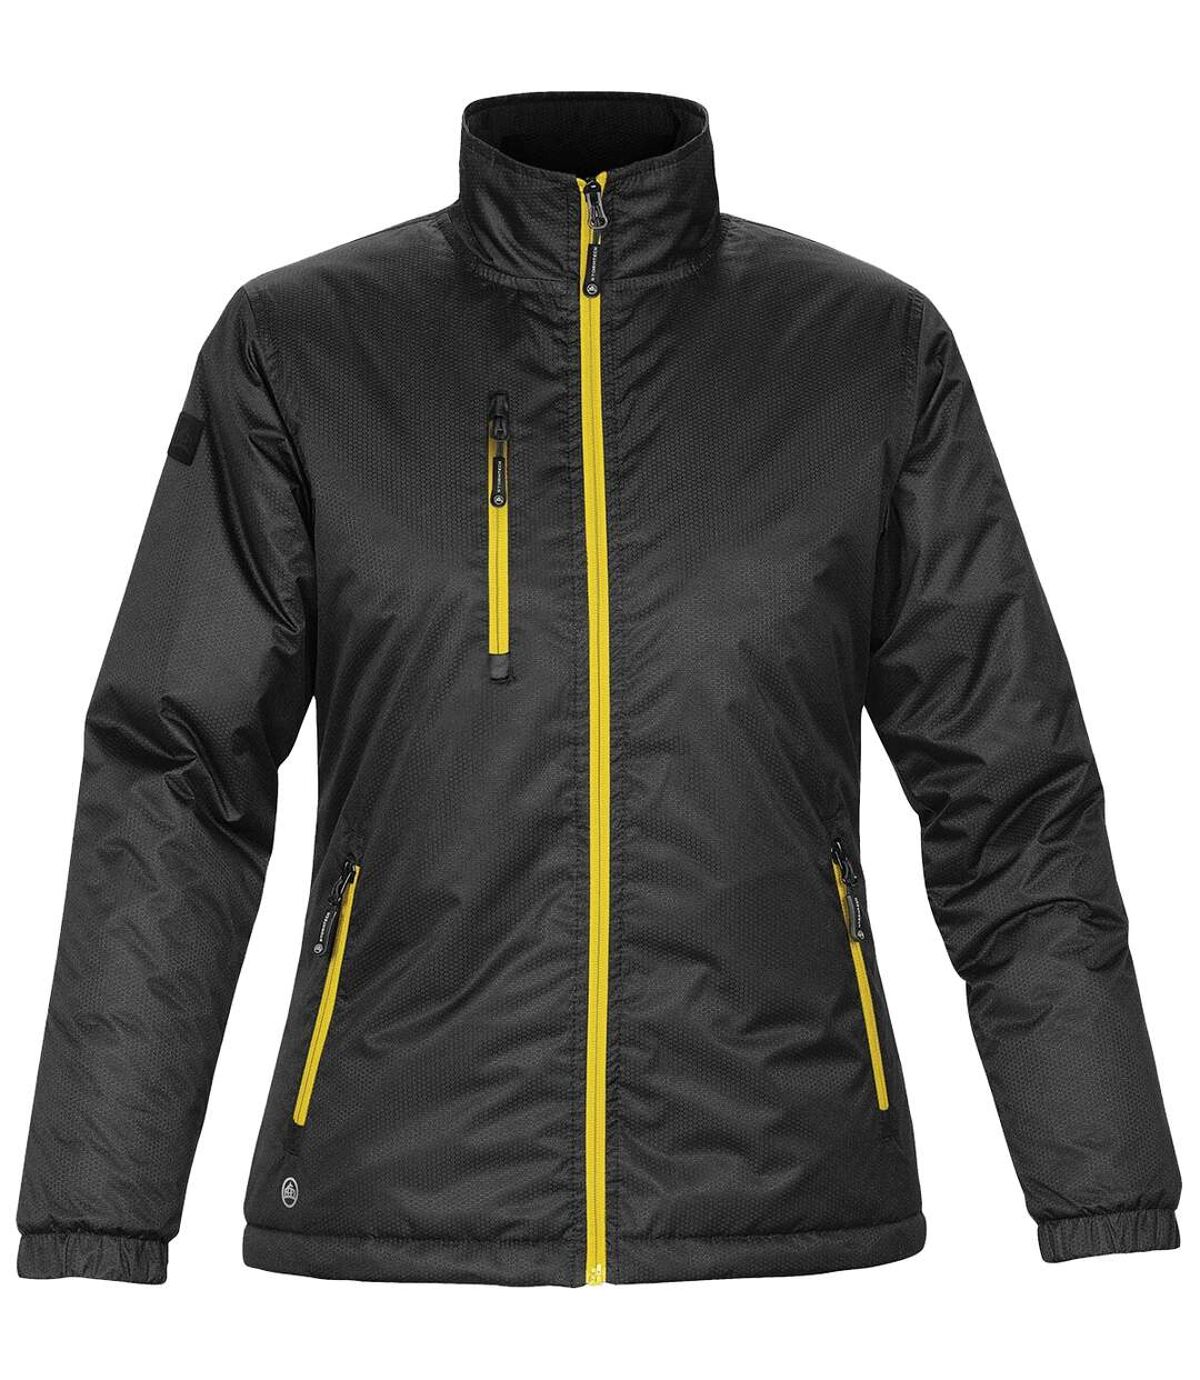 Stormtech Ladies/Womens Axis Water Resistant Jacket (Black/Sundance) - UTBC2080